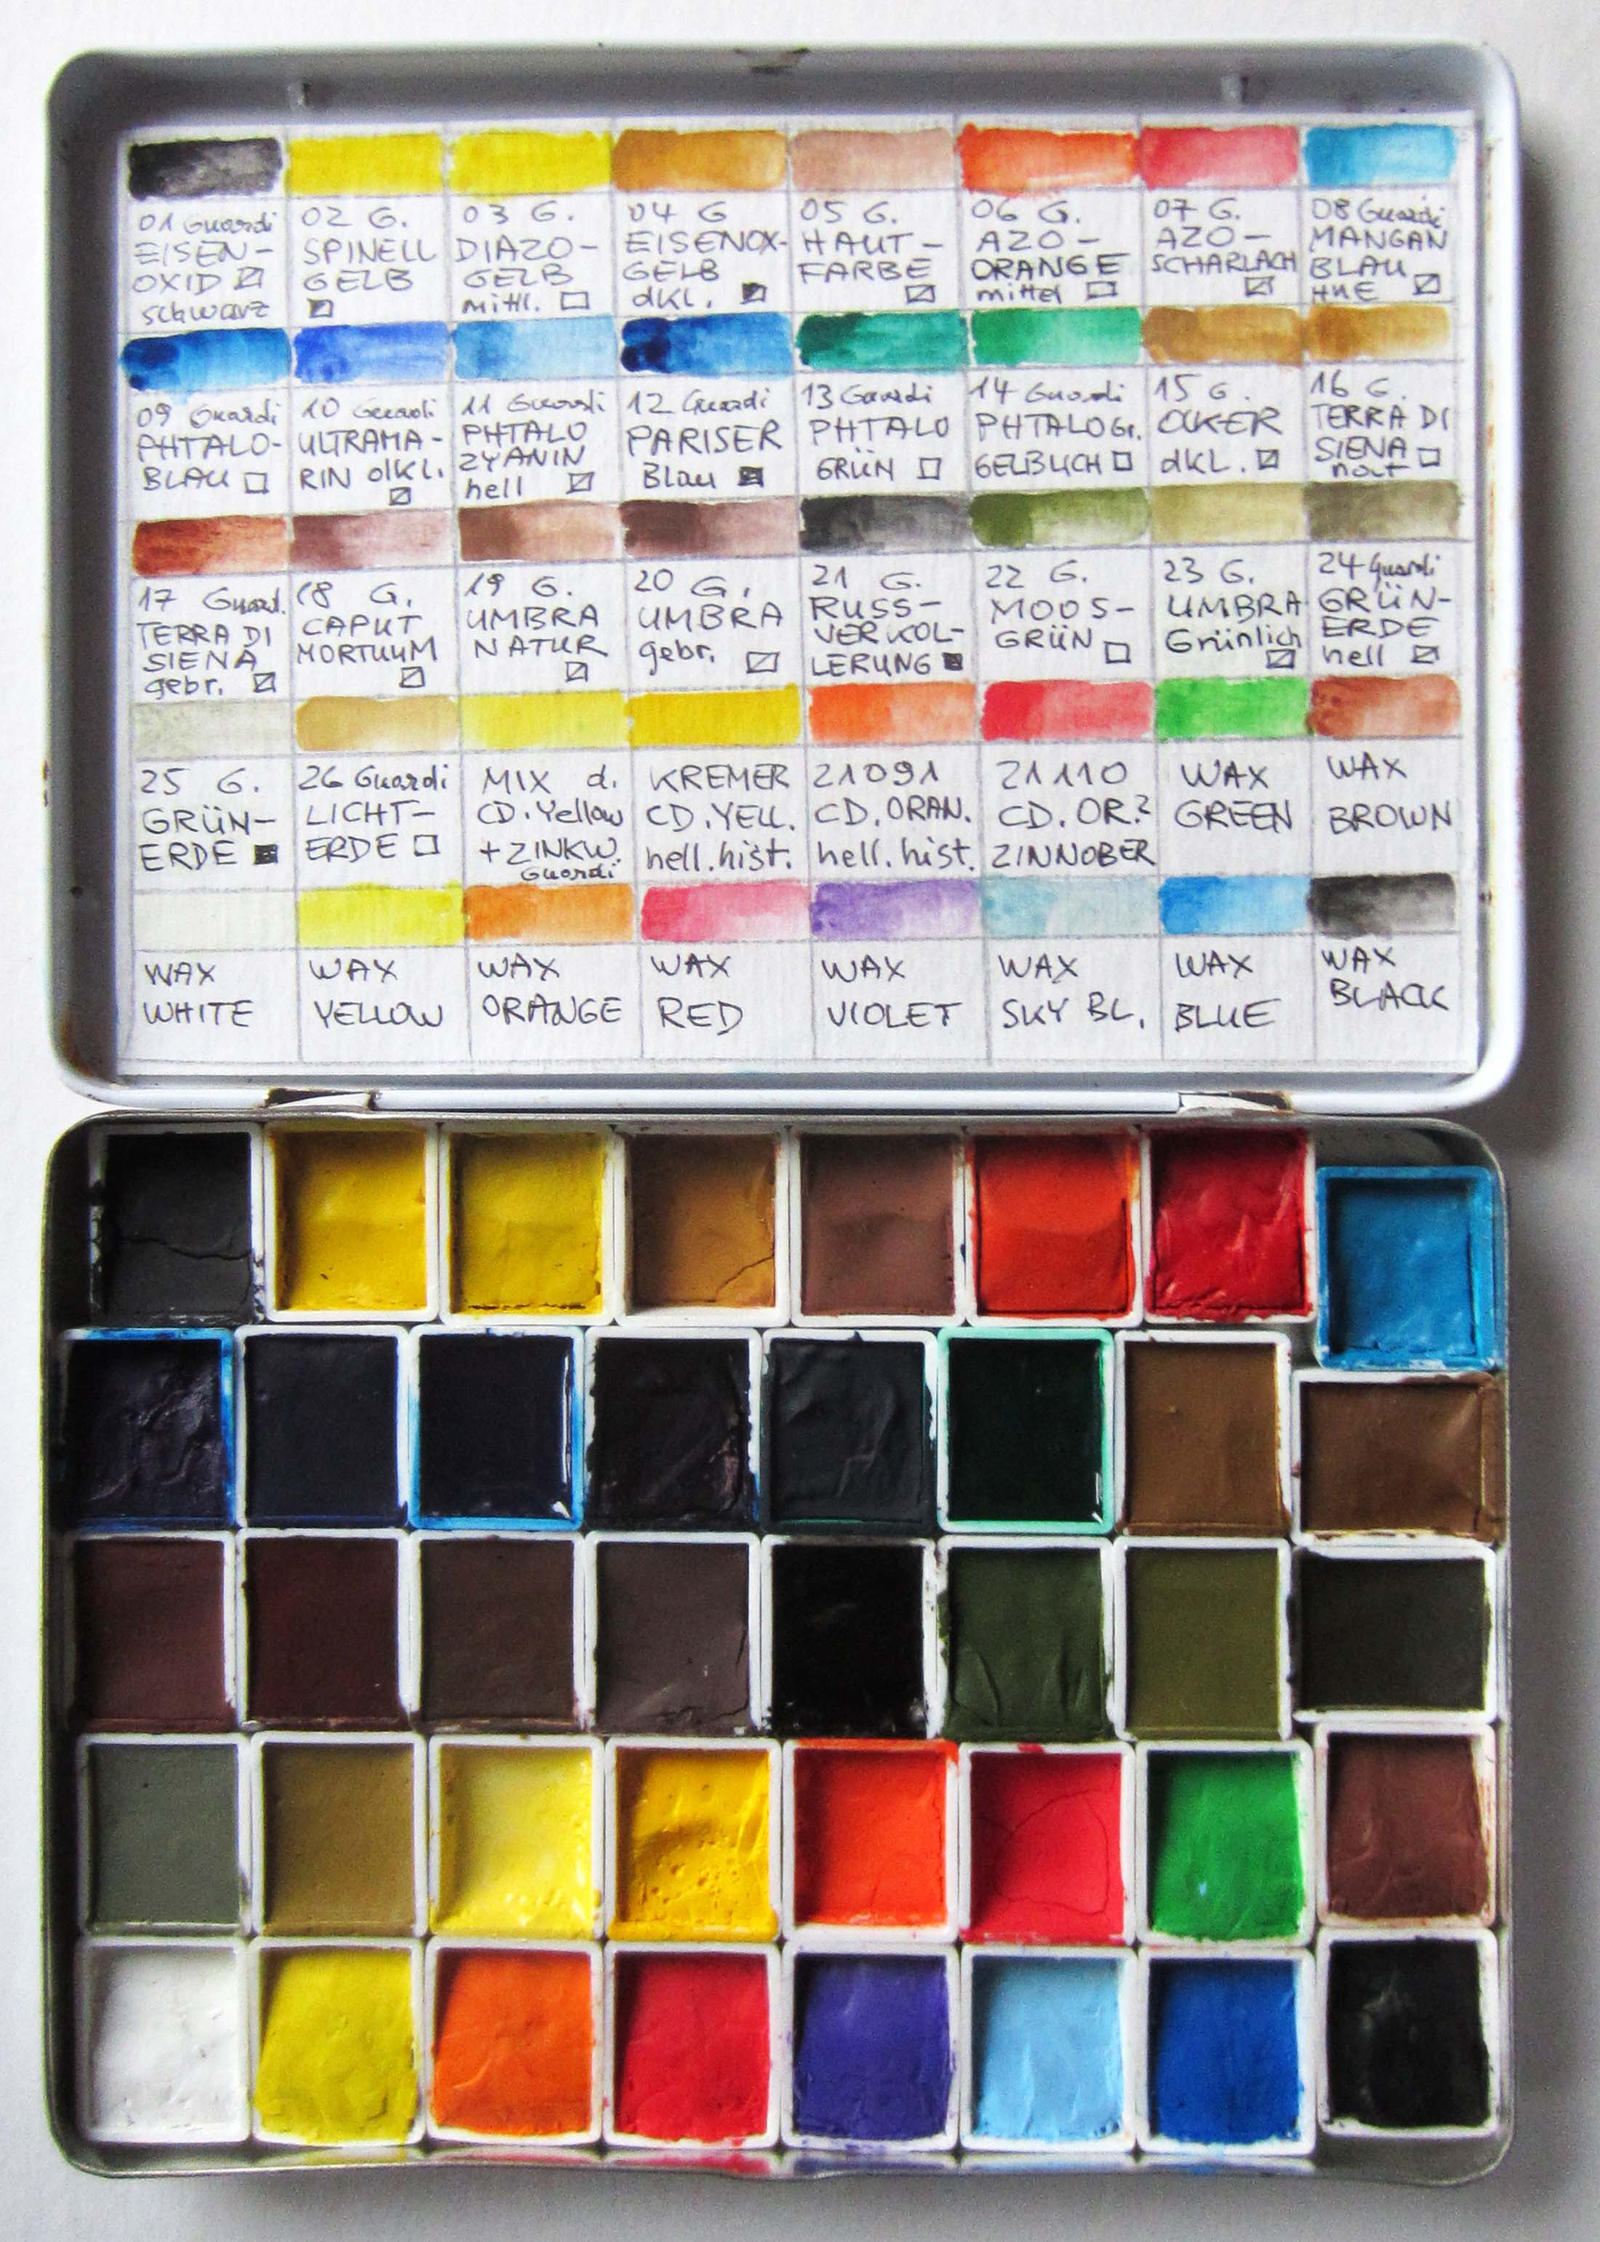 Selfmade Aquarellcolor Guardi - pigments by pesim65 on DeviantArt